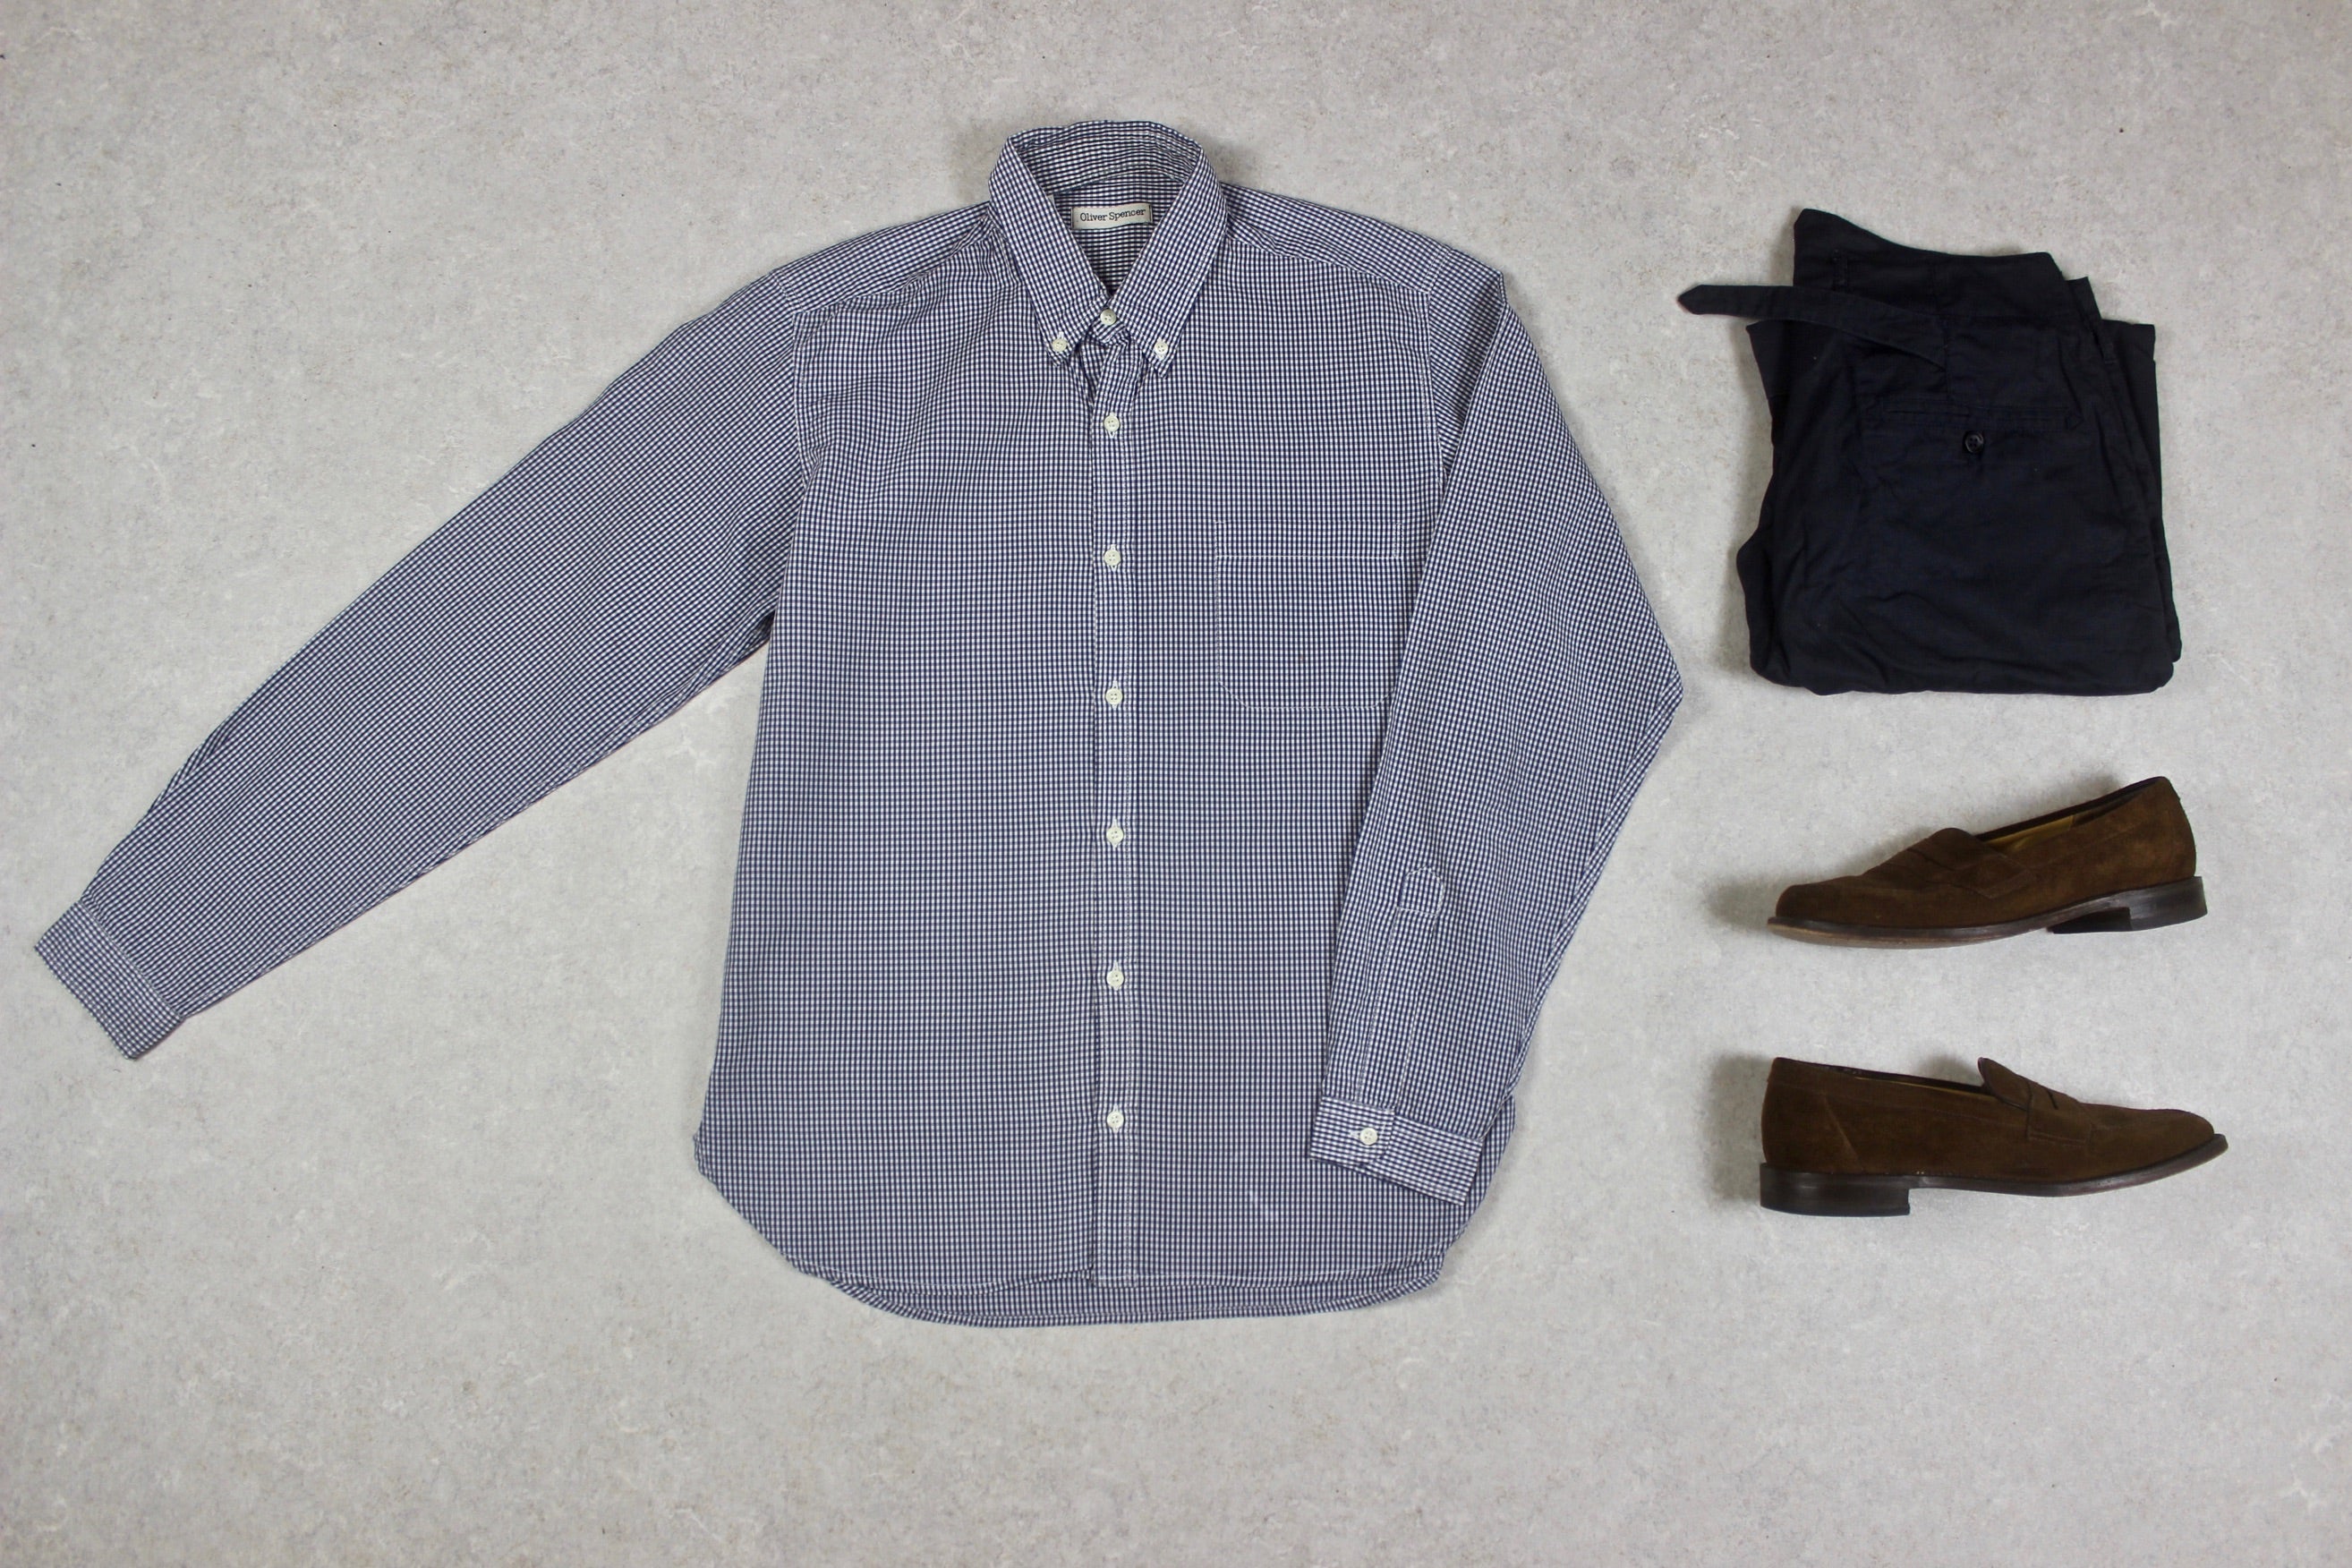 Oliver Spencer - Shirt - Navy Blue/White Gingham Check - 14.5/Extra Small